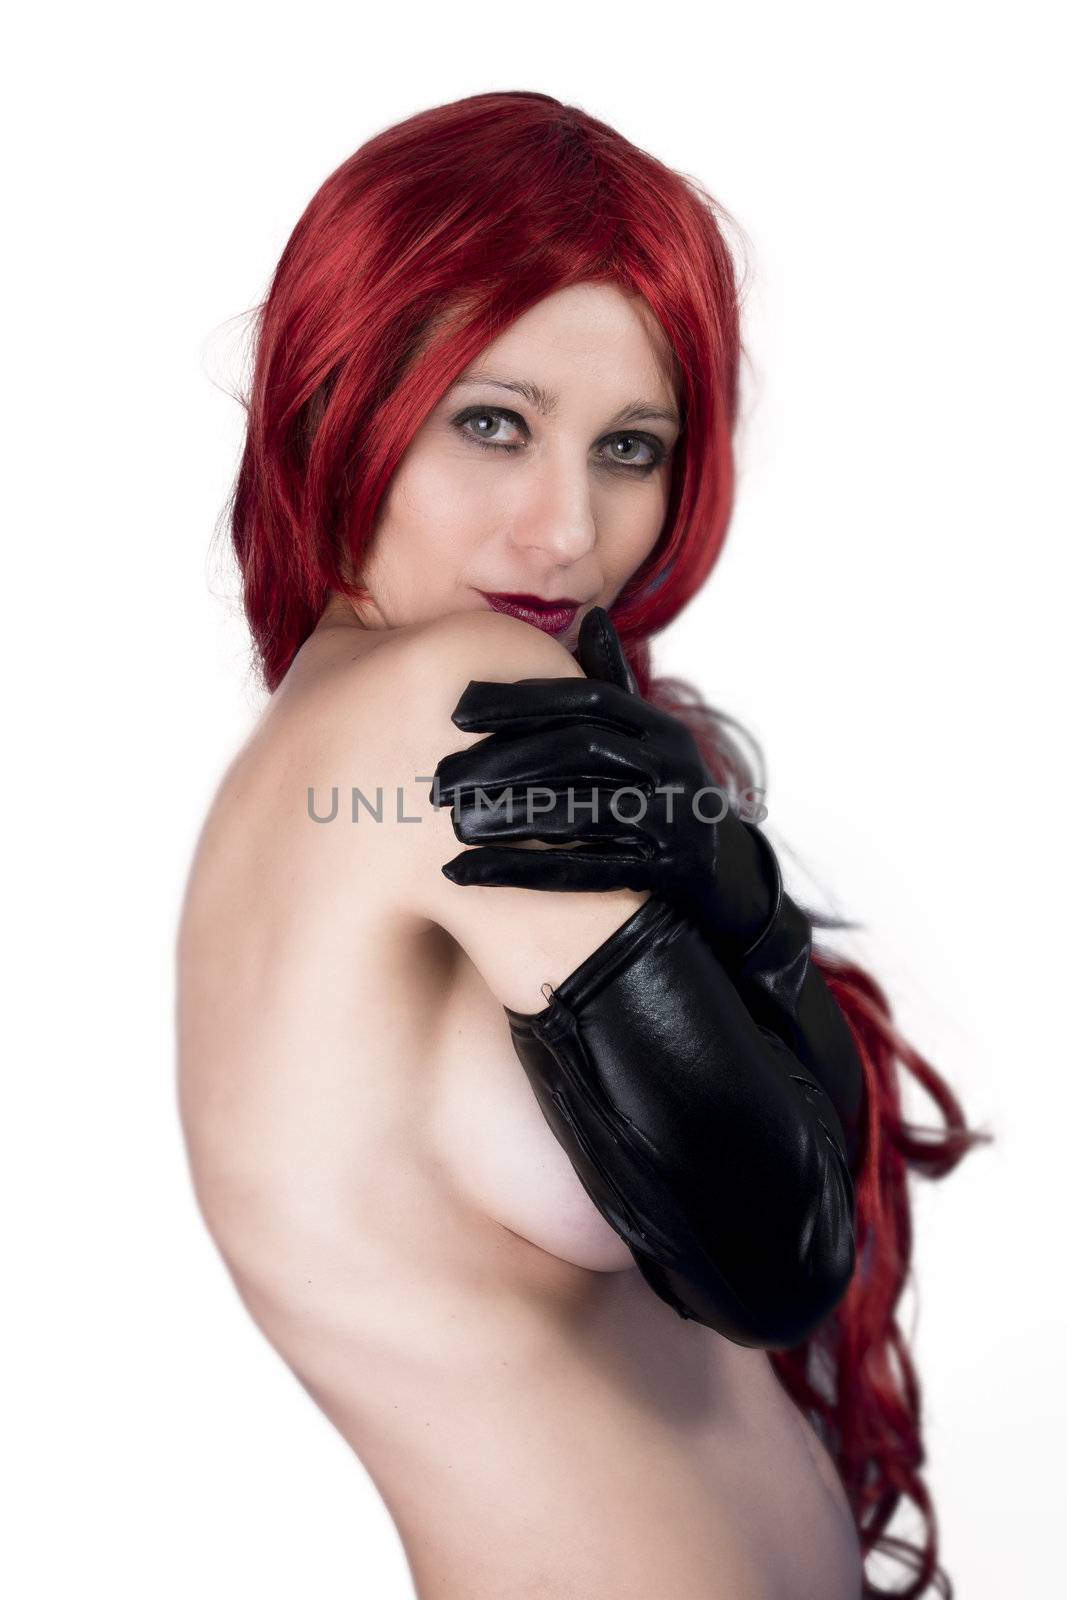 Fetish red hair model posing in black latex outfit